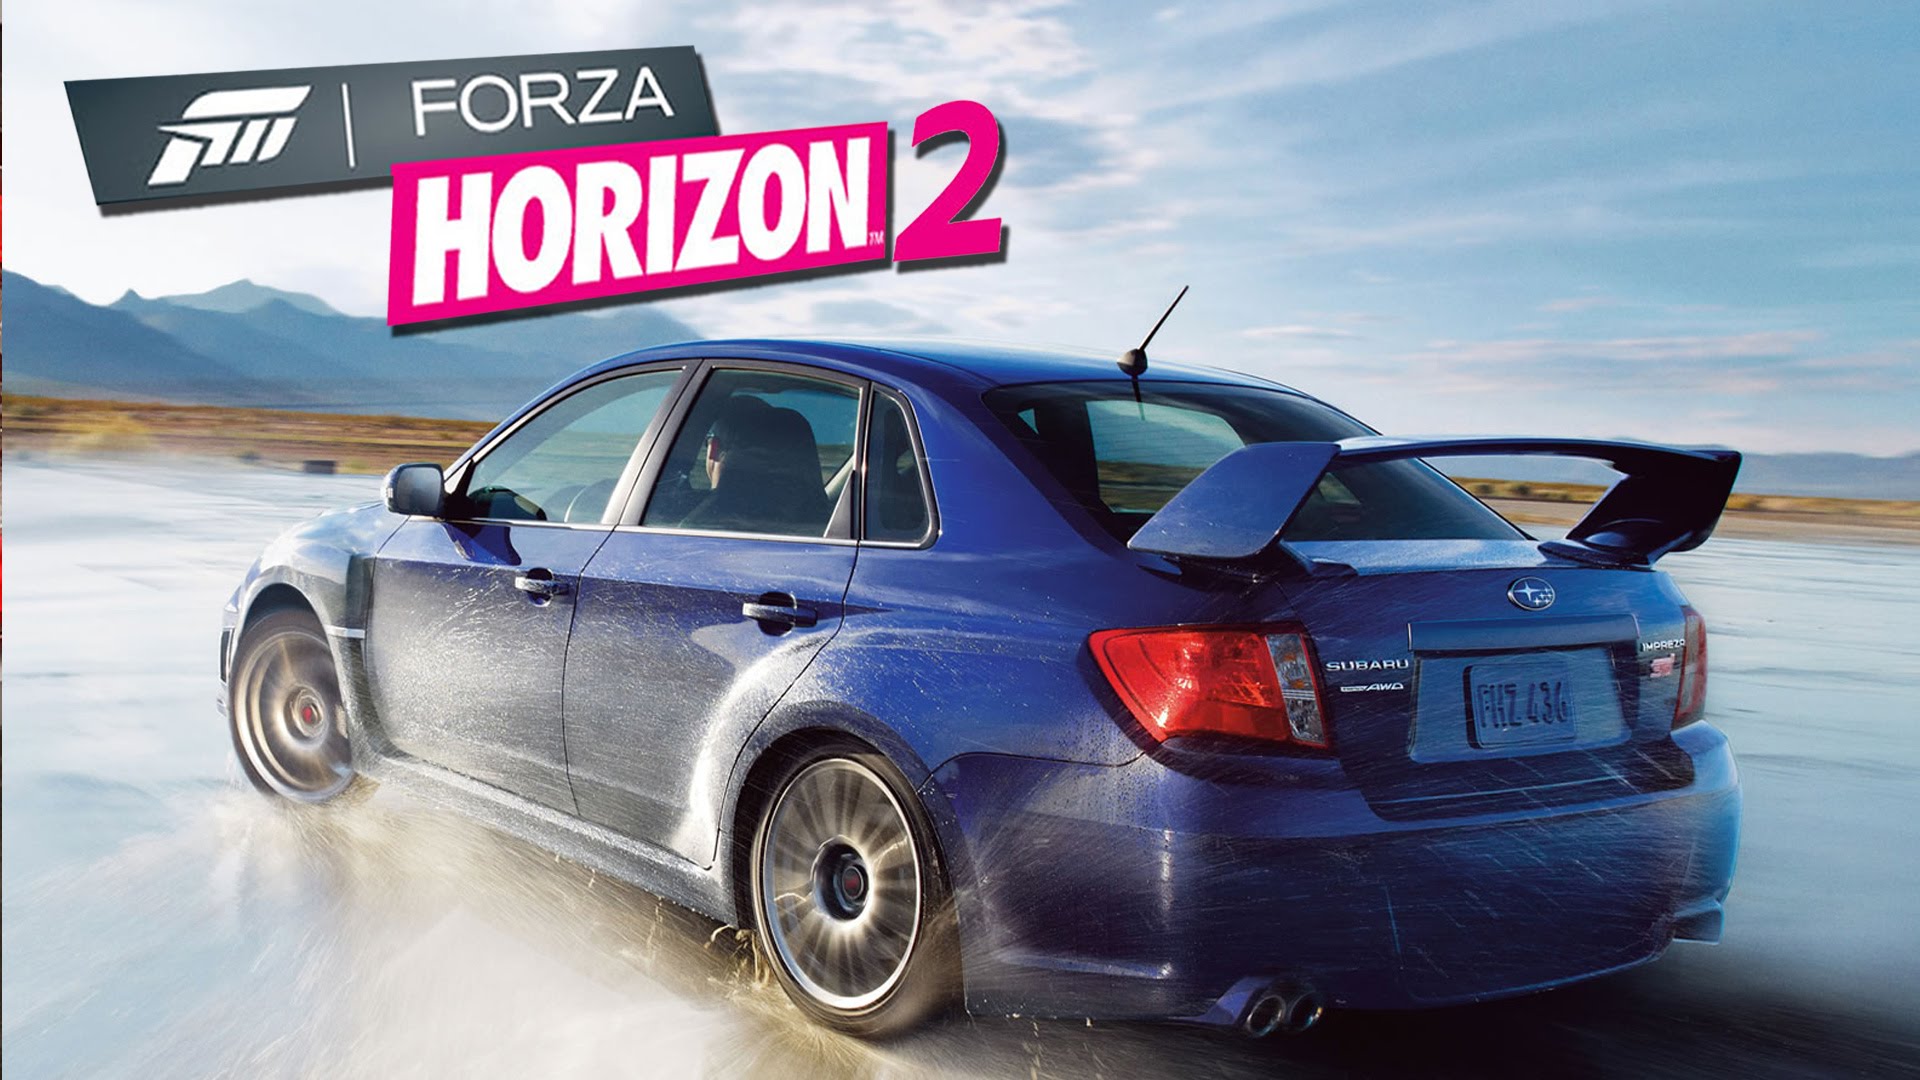 Forza Horizon 2 Wallpapers